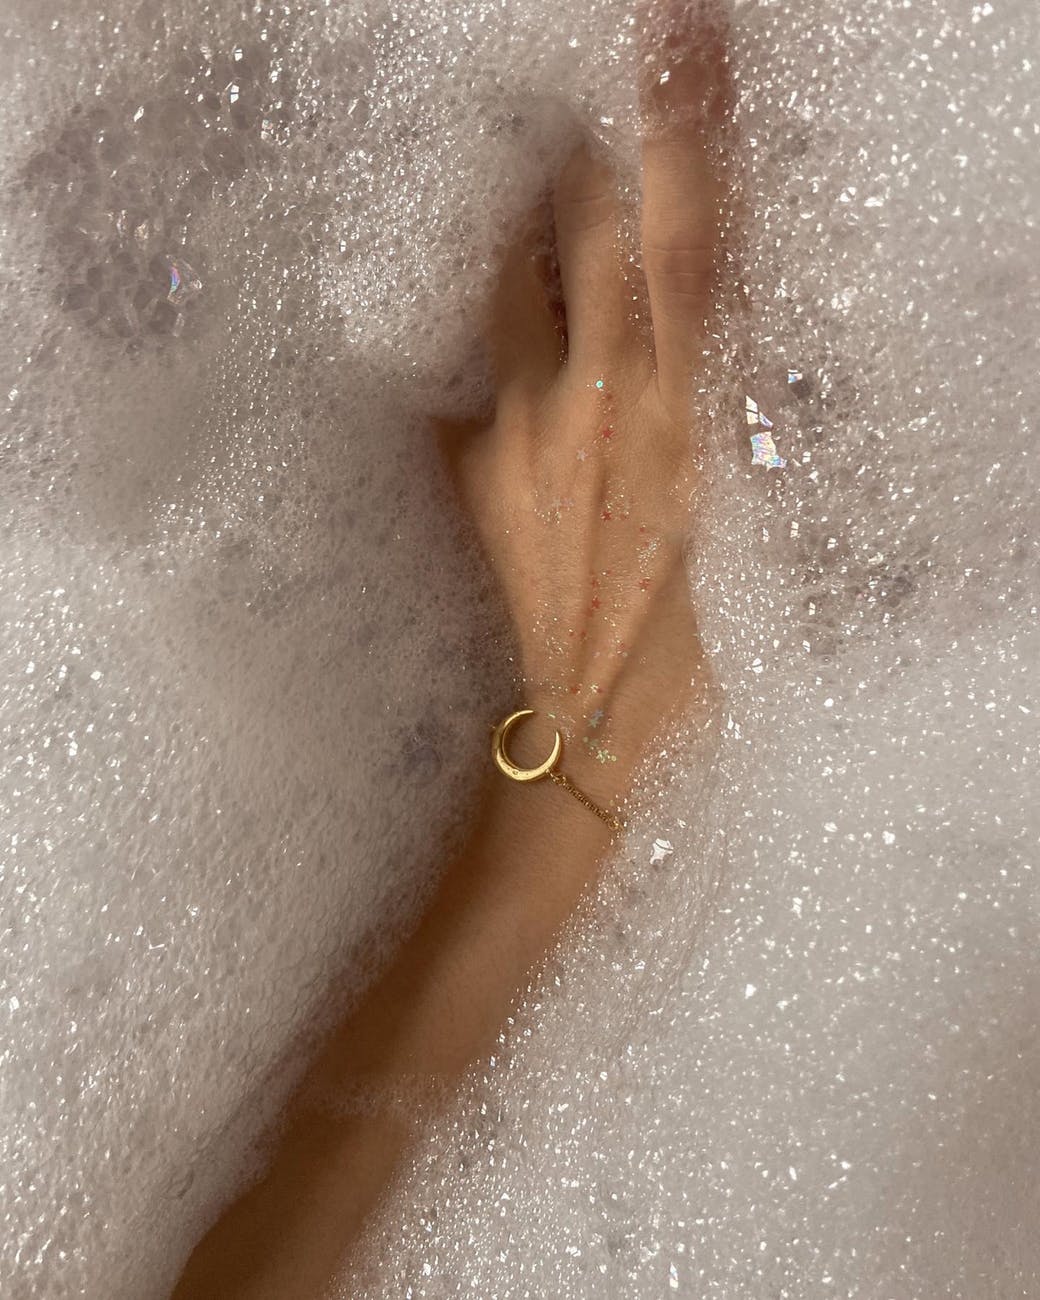 woman with bracelet taking bath with foam